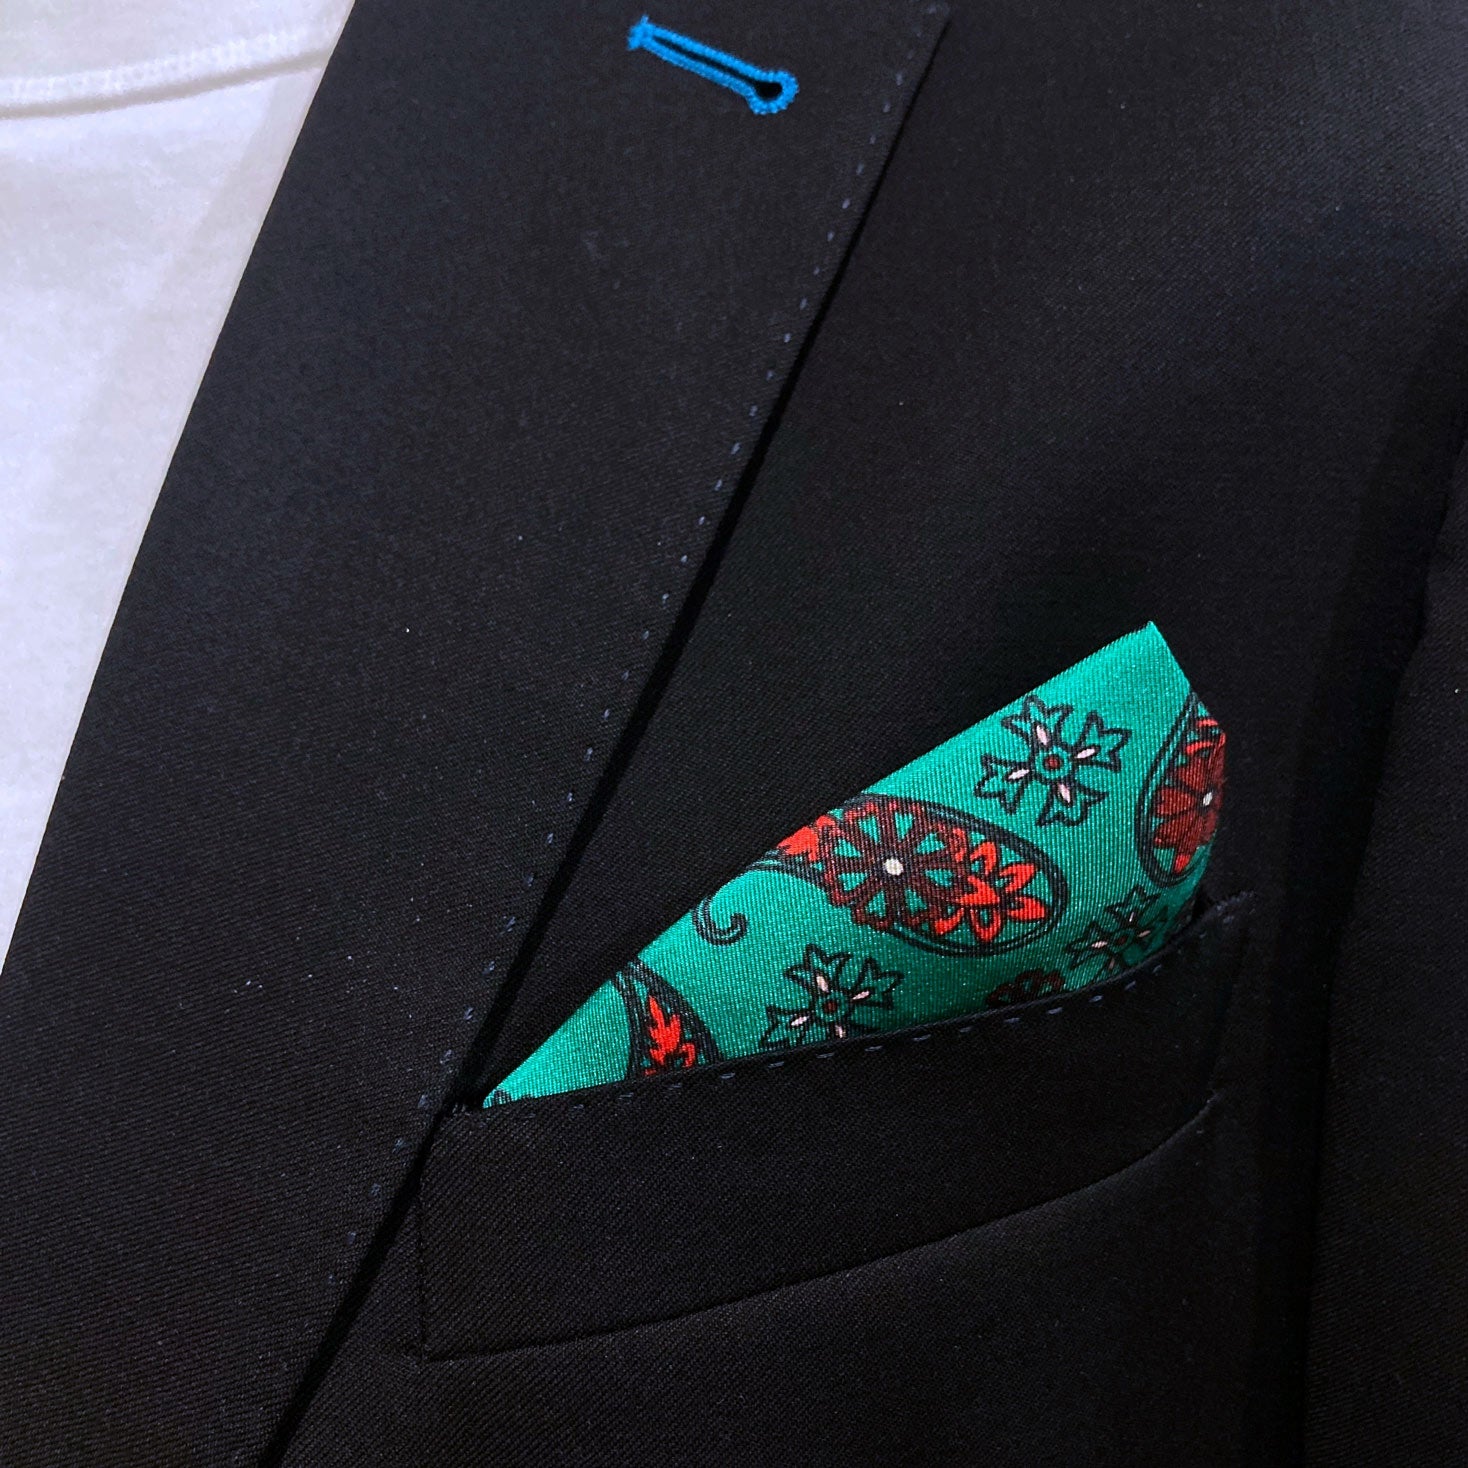 Close-up of 'Fes' silk pocket square in breast pocket of dark suit jacket.